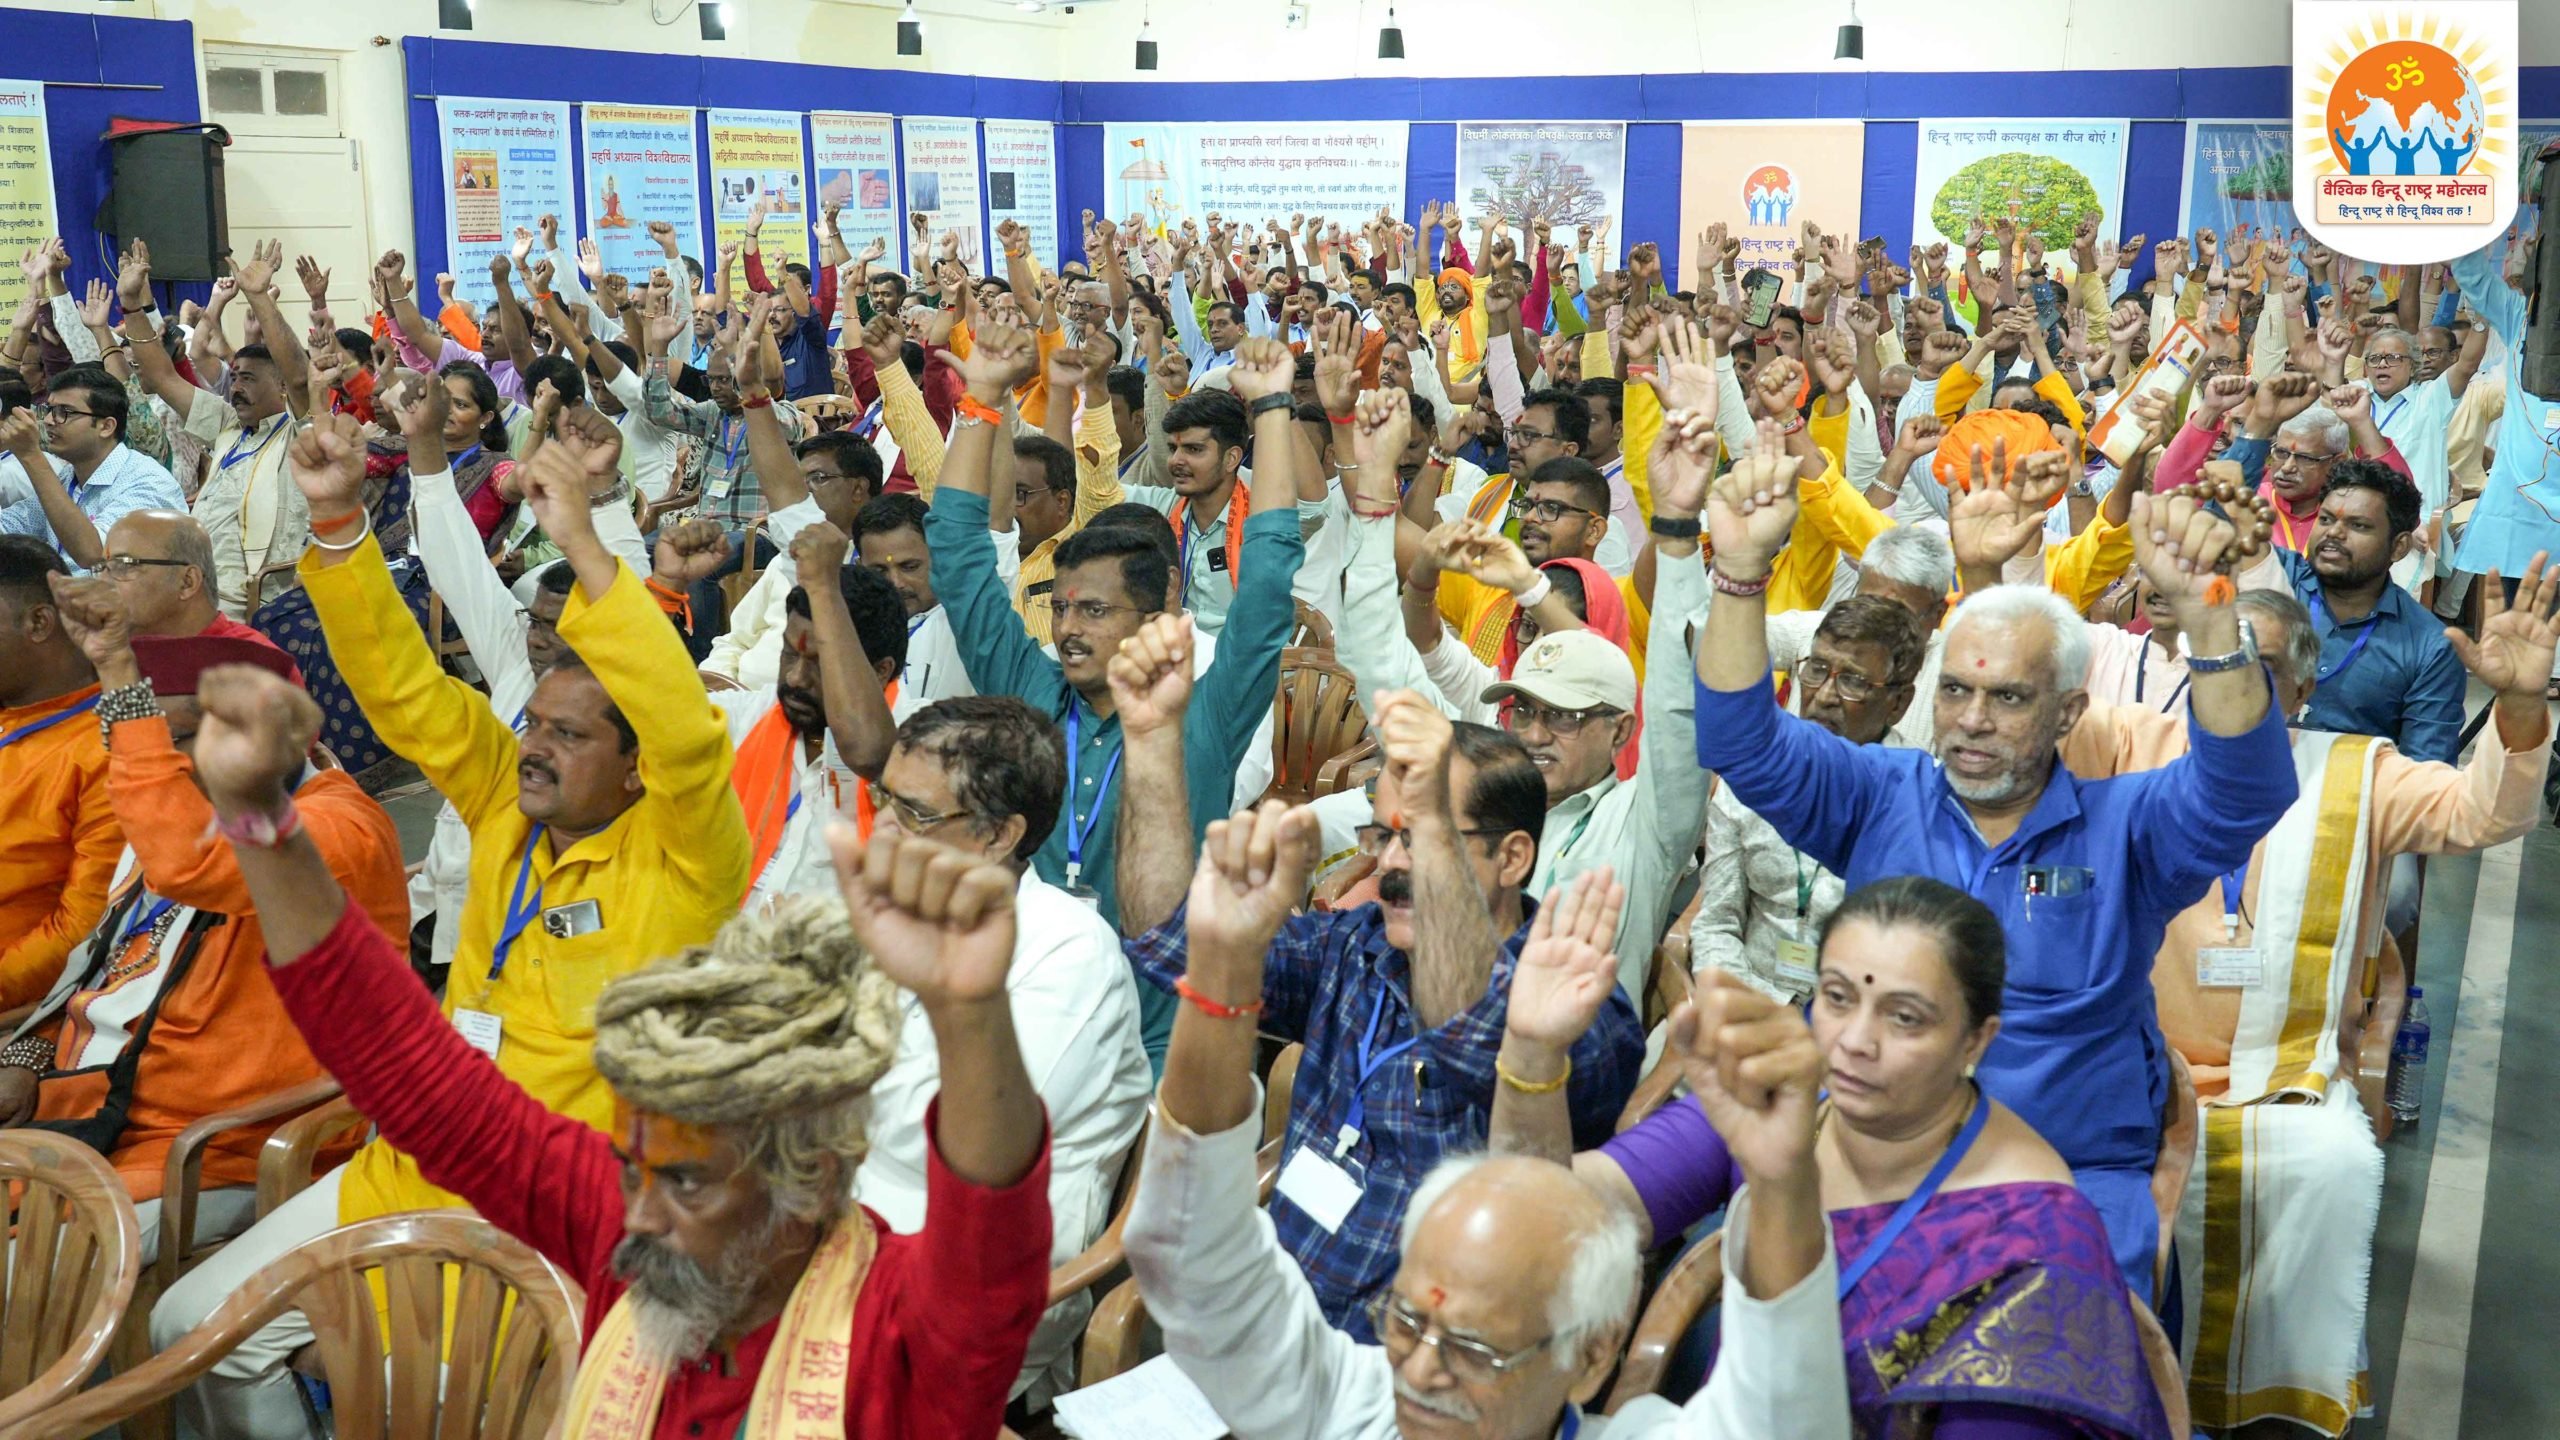 Devout Hindus enthusiastically hailing the 'Hindu Rashtra'